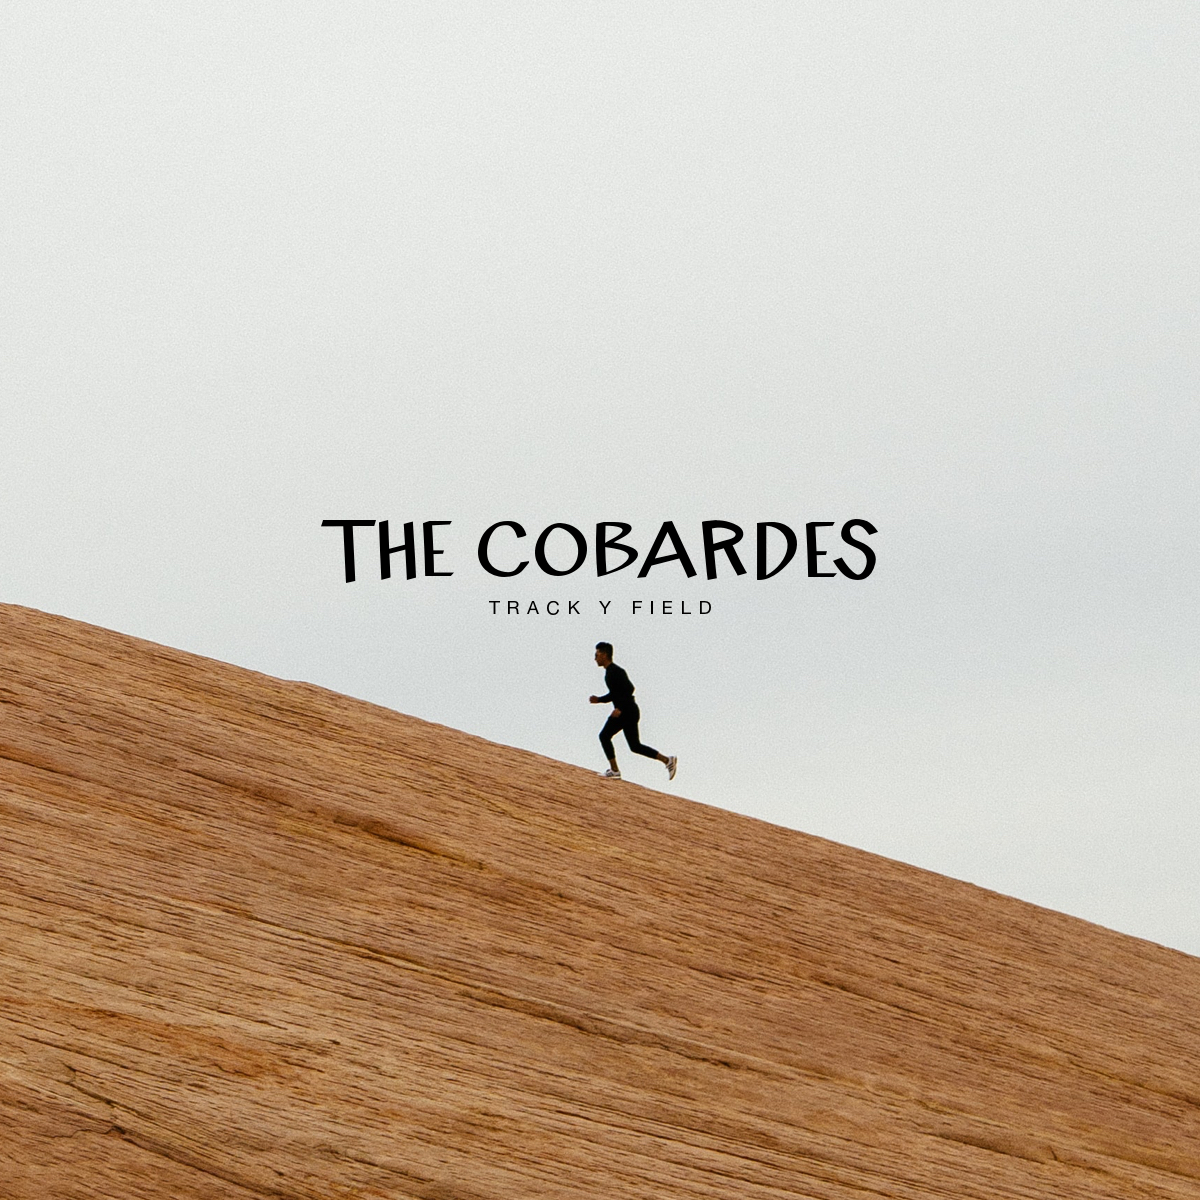 (c) Thecobardes.com